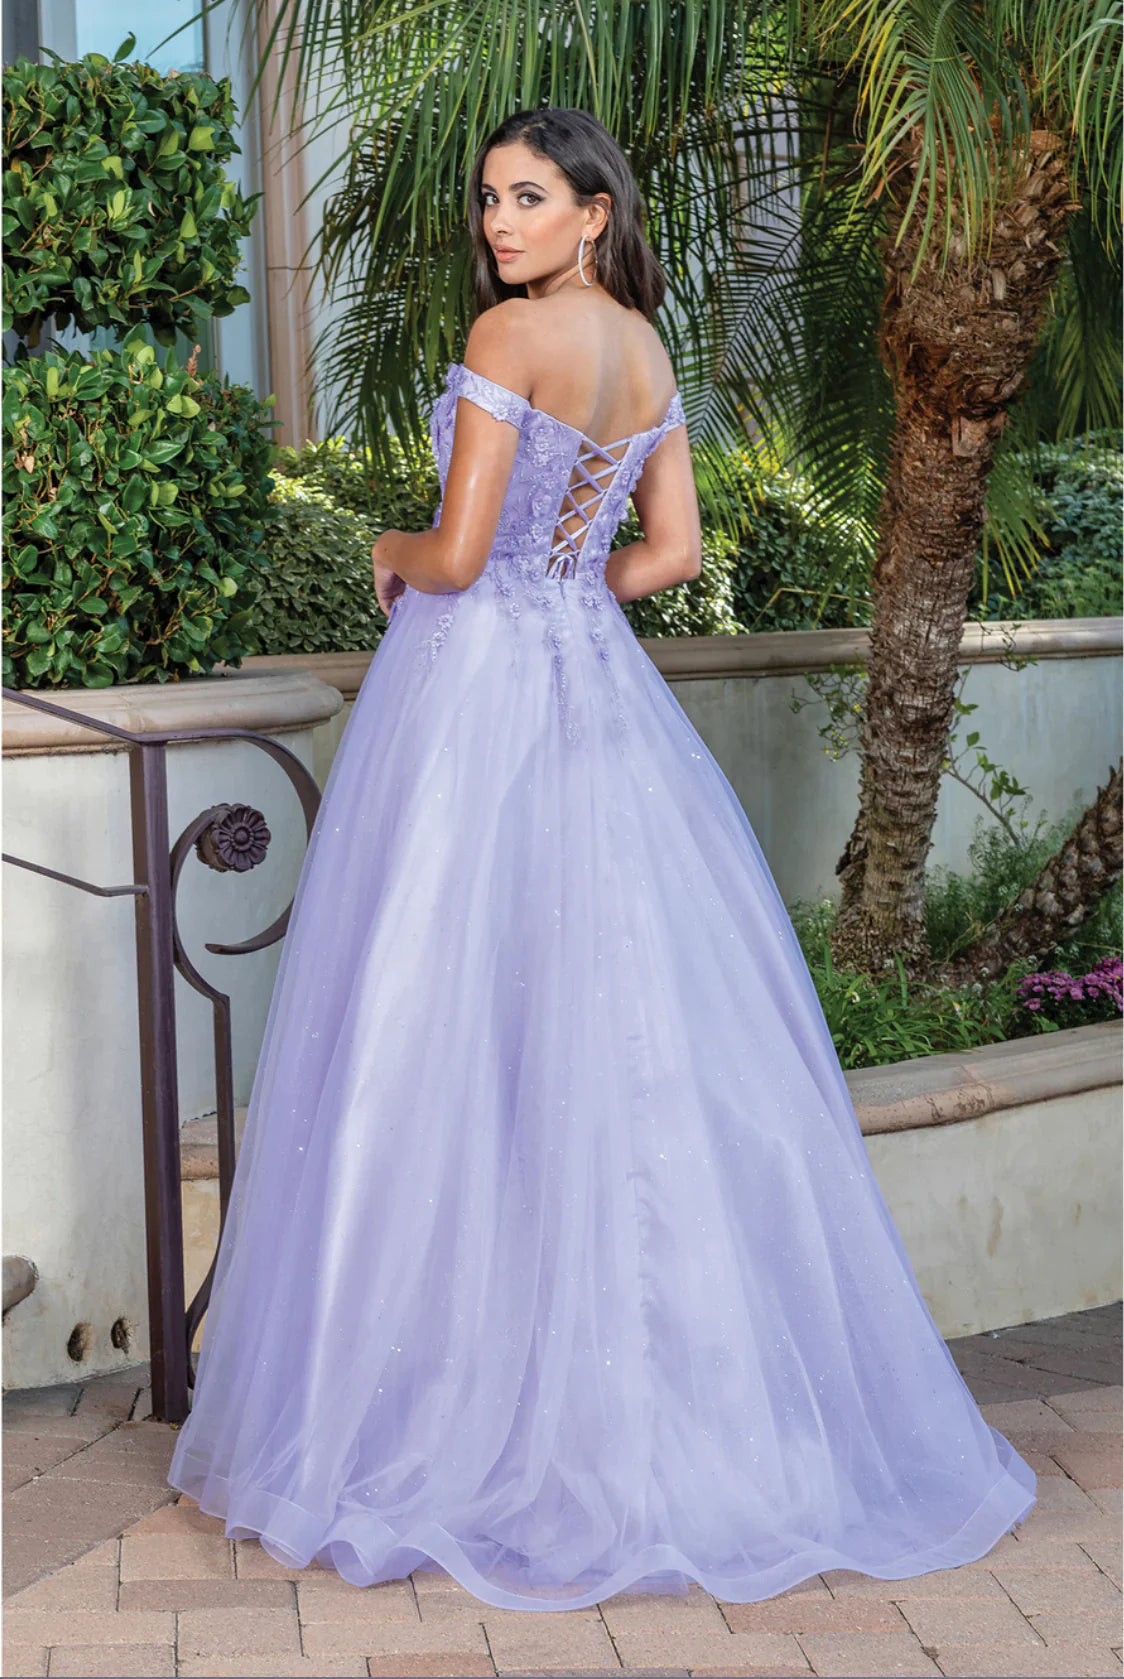 lilac dress long